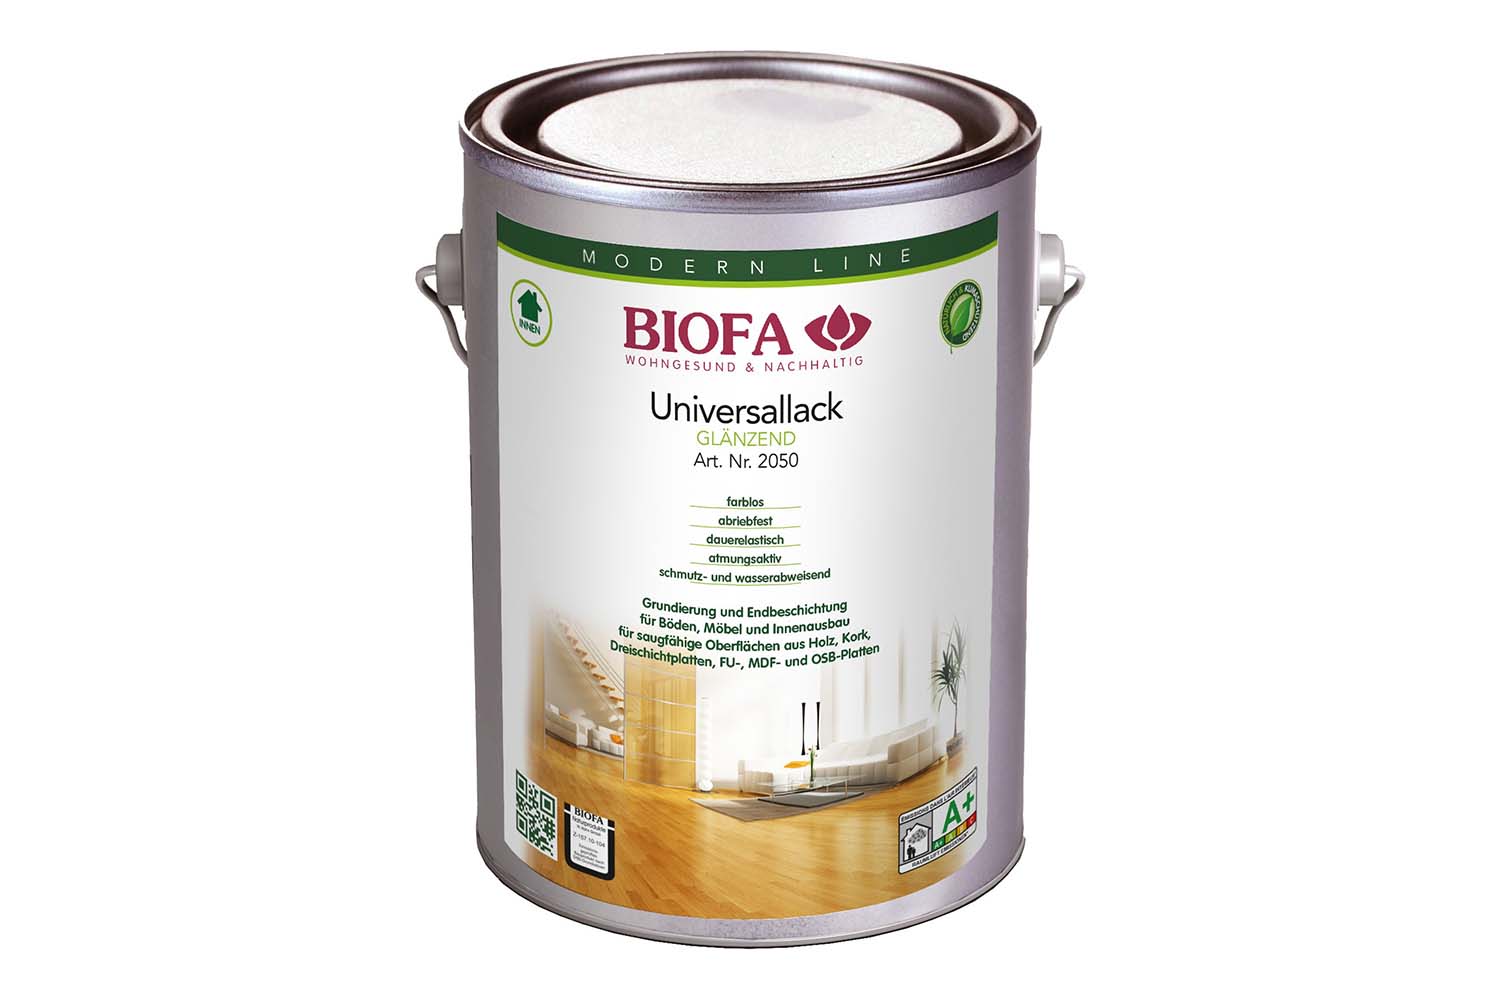 Biofa Universallack, transparent, glänzend